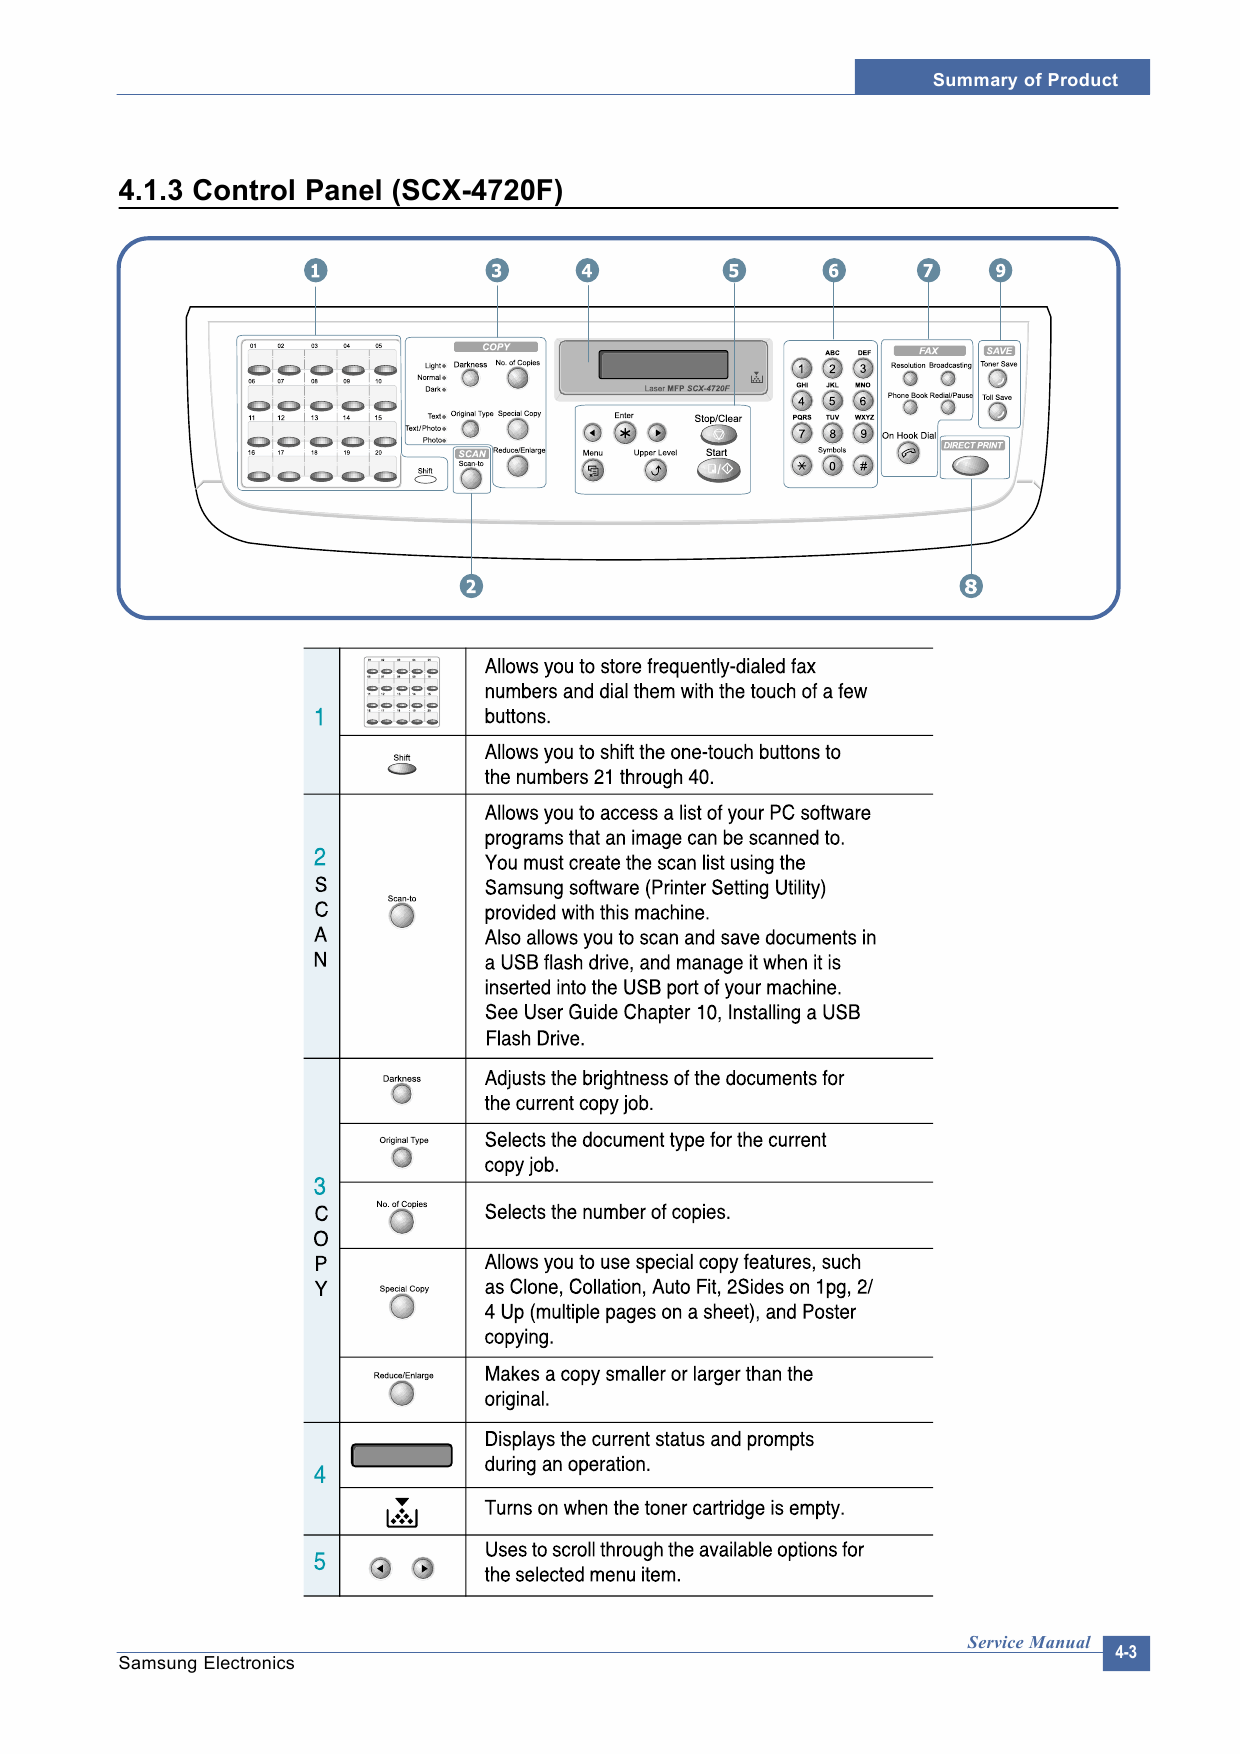 Samsung Digital-Laser-MFP SCX-4720F 4520 Parts and Service Manual-2